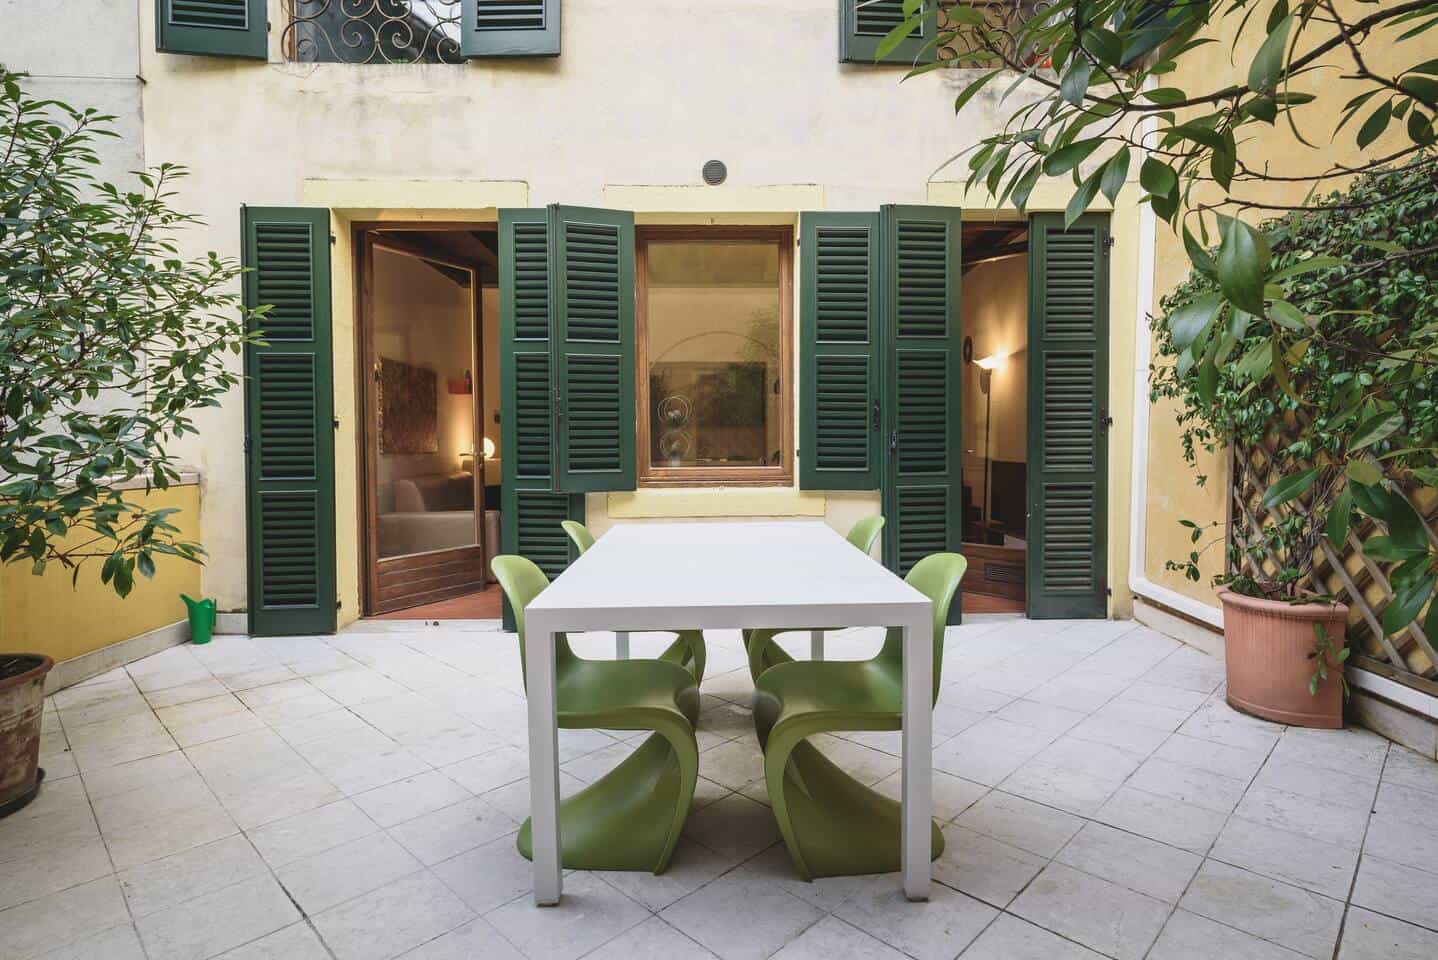 Image of Airbnb rental in Verona, Italy